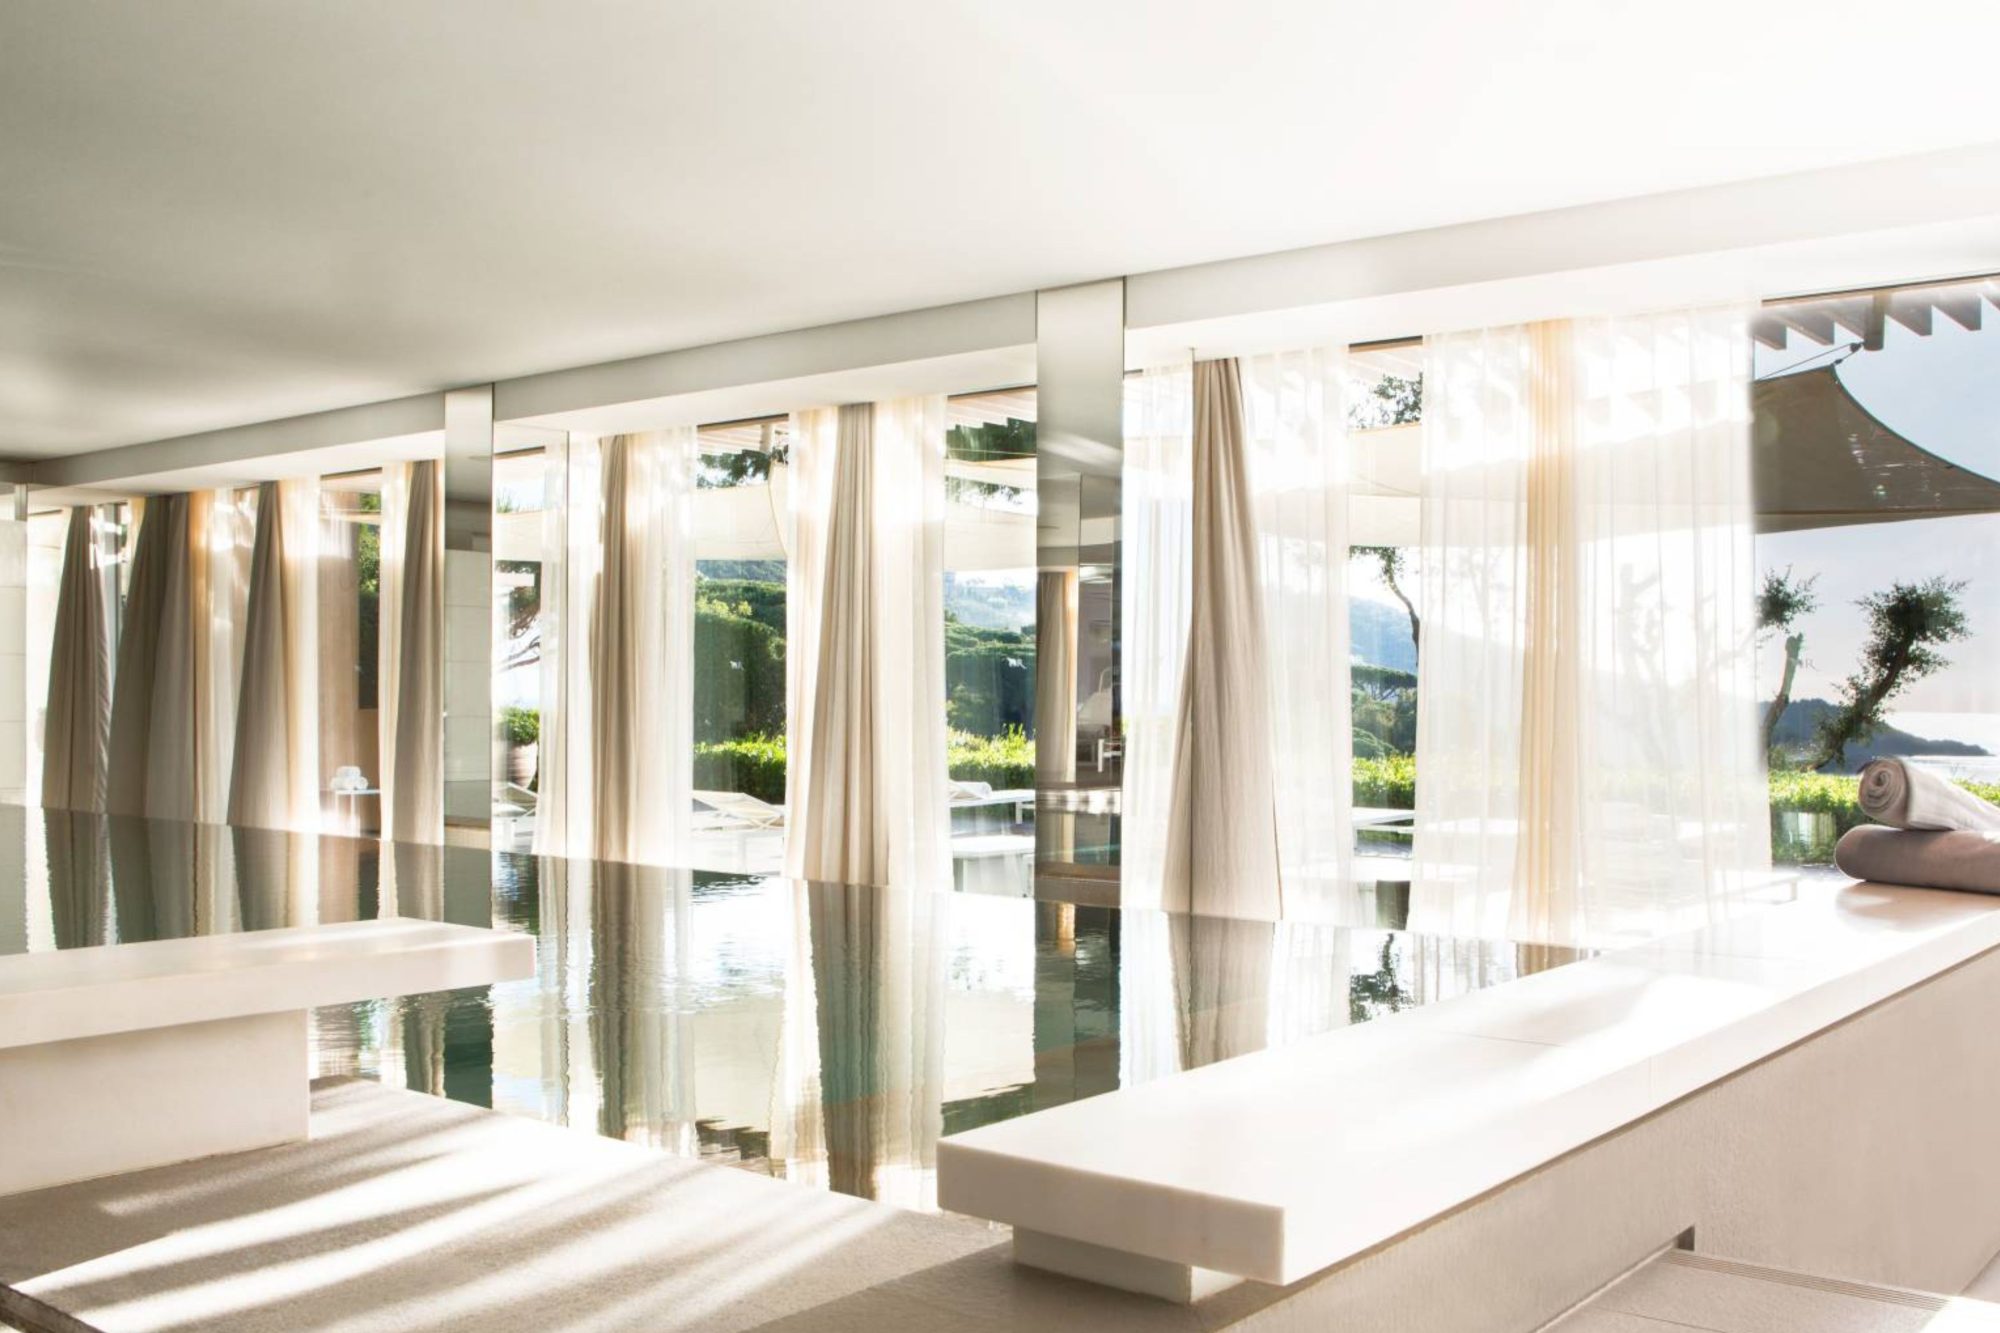 La Reserve Ramatuelle Hotel, Spa & Villas offers a private sanctuary on the outskirts of St. Tropez